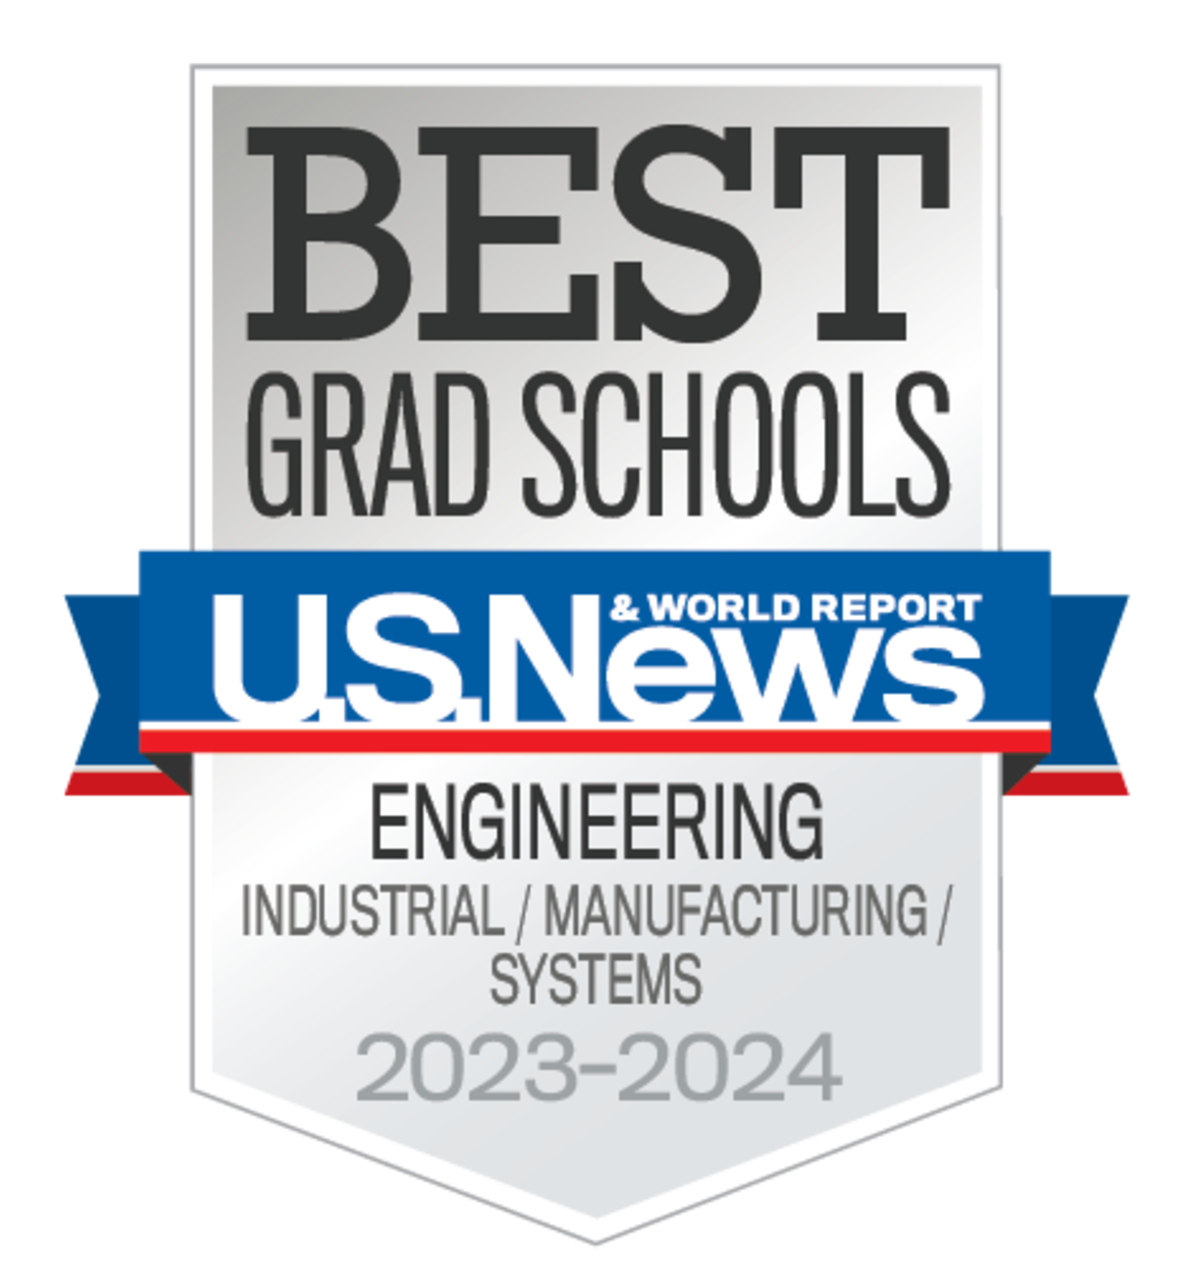 U.S. News & World Report Badge for Systems Engineering program